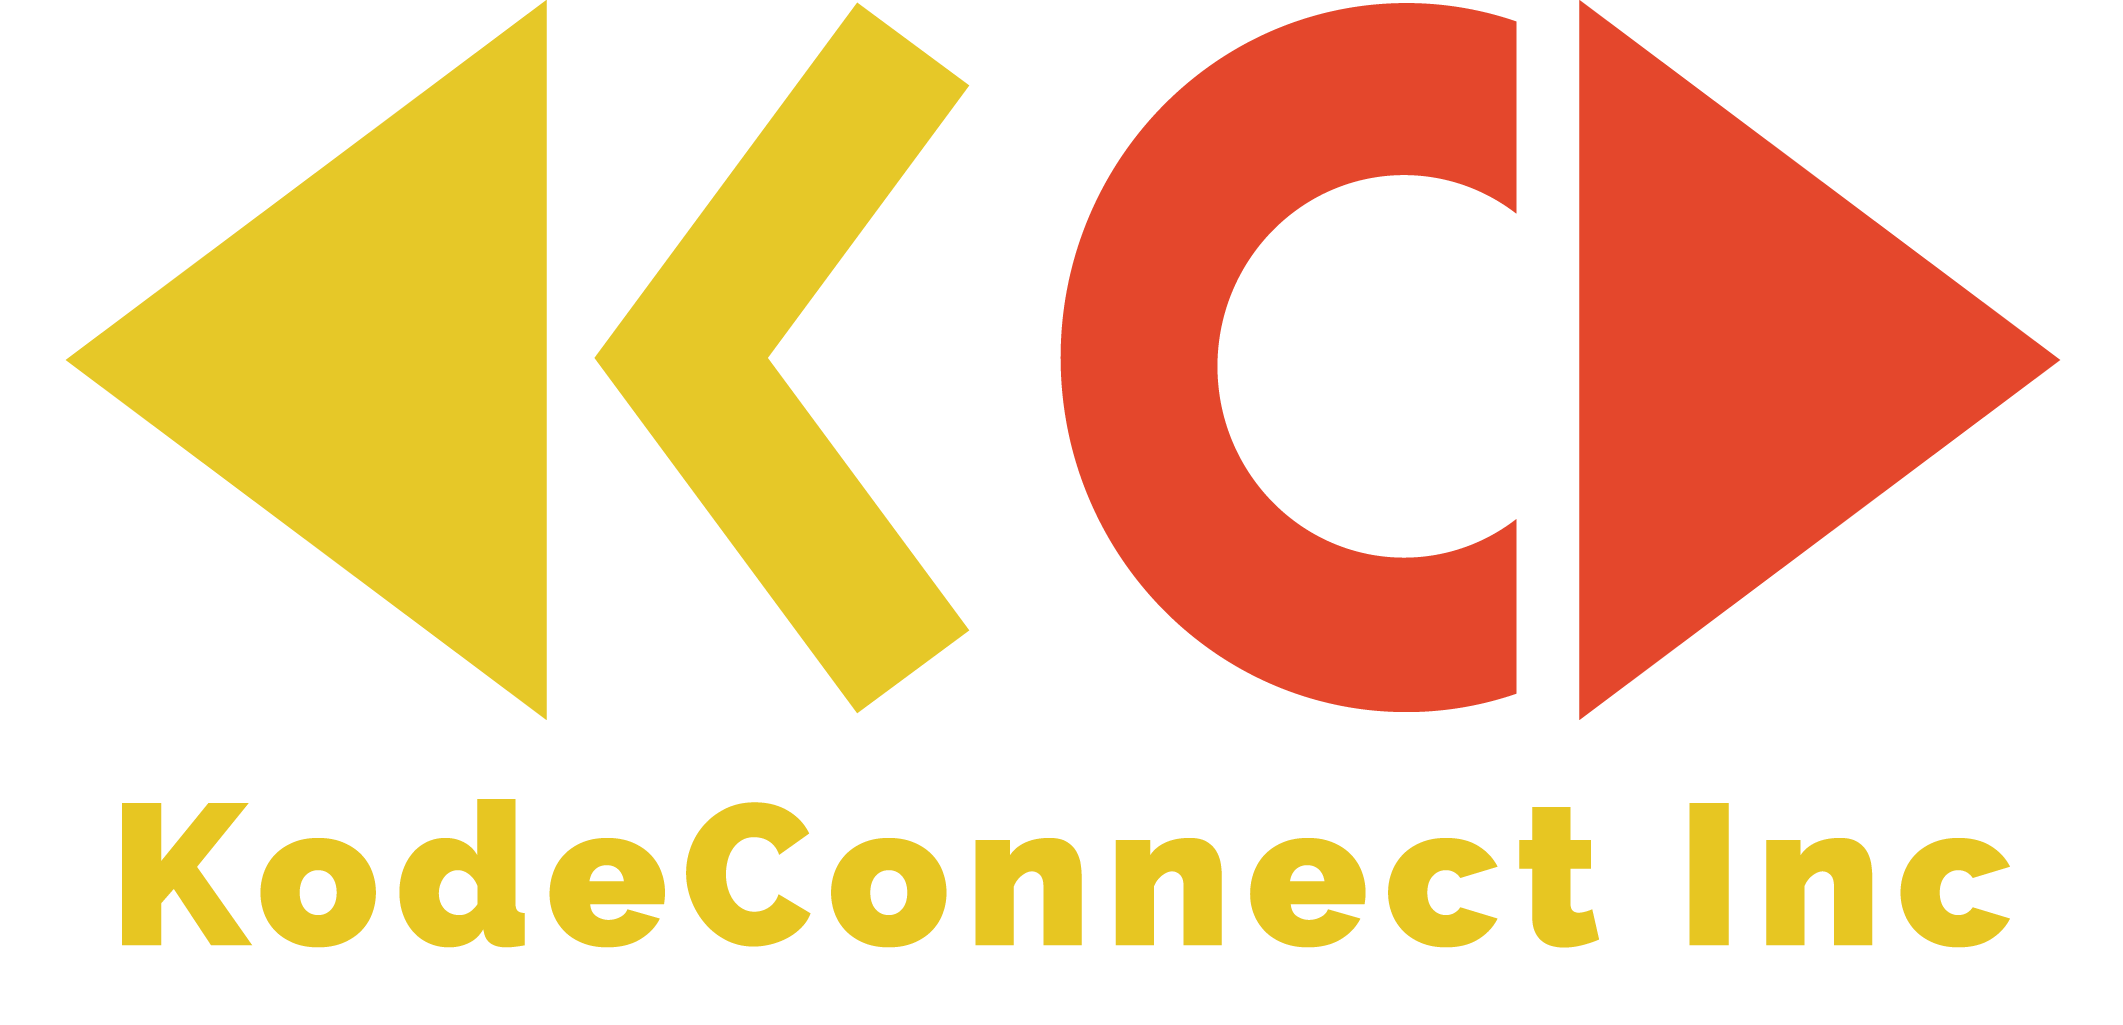 KodeConnect Inc